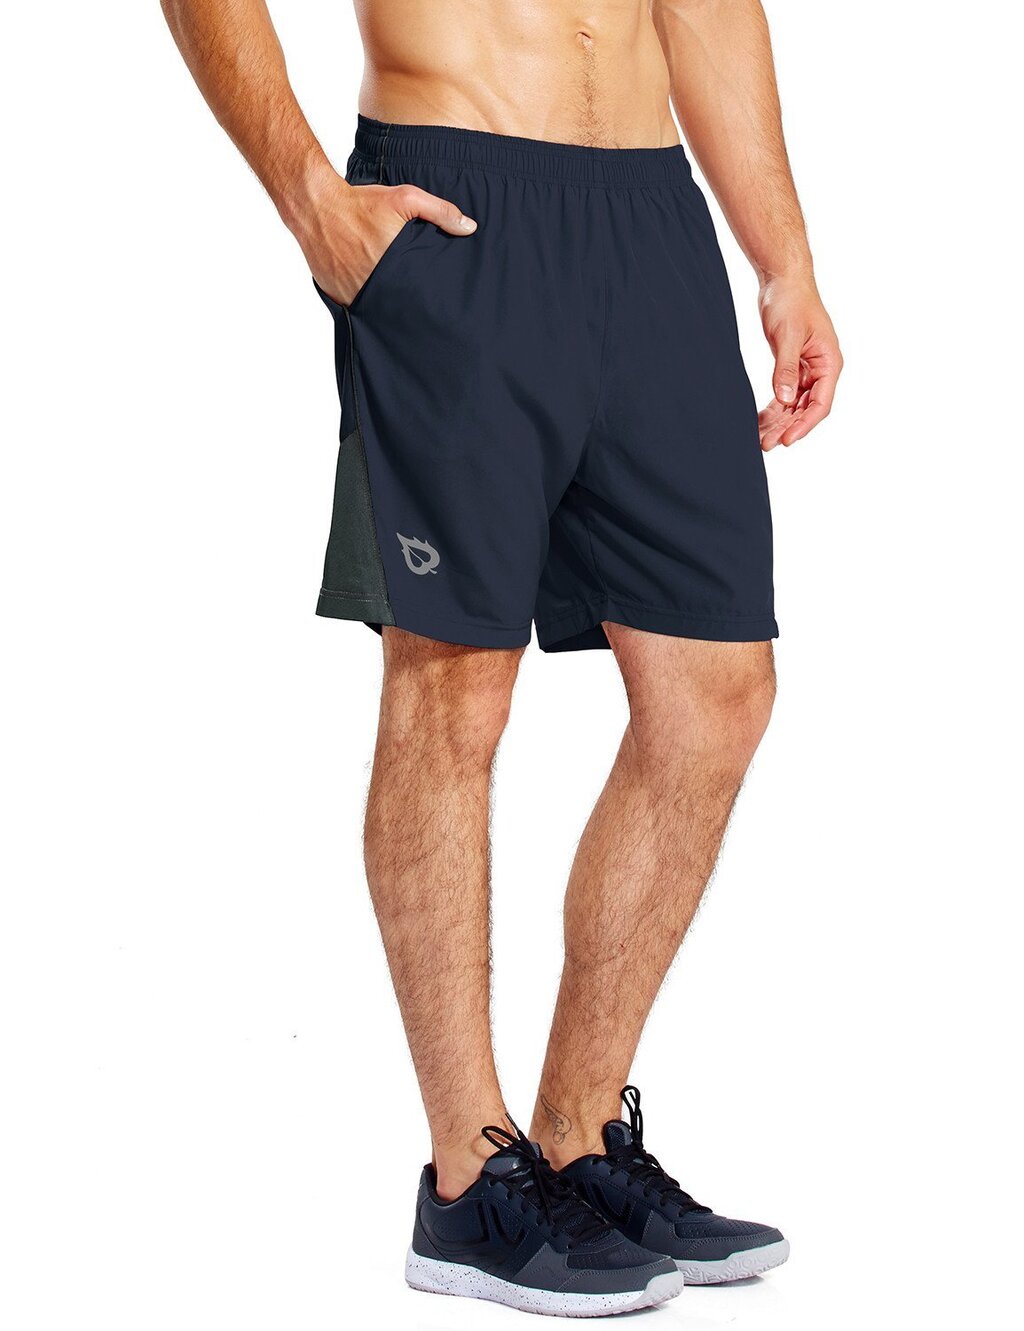 running shorts for men